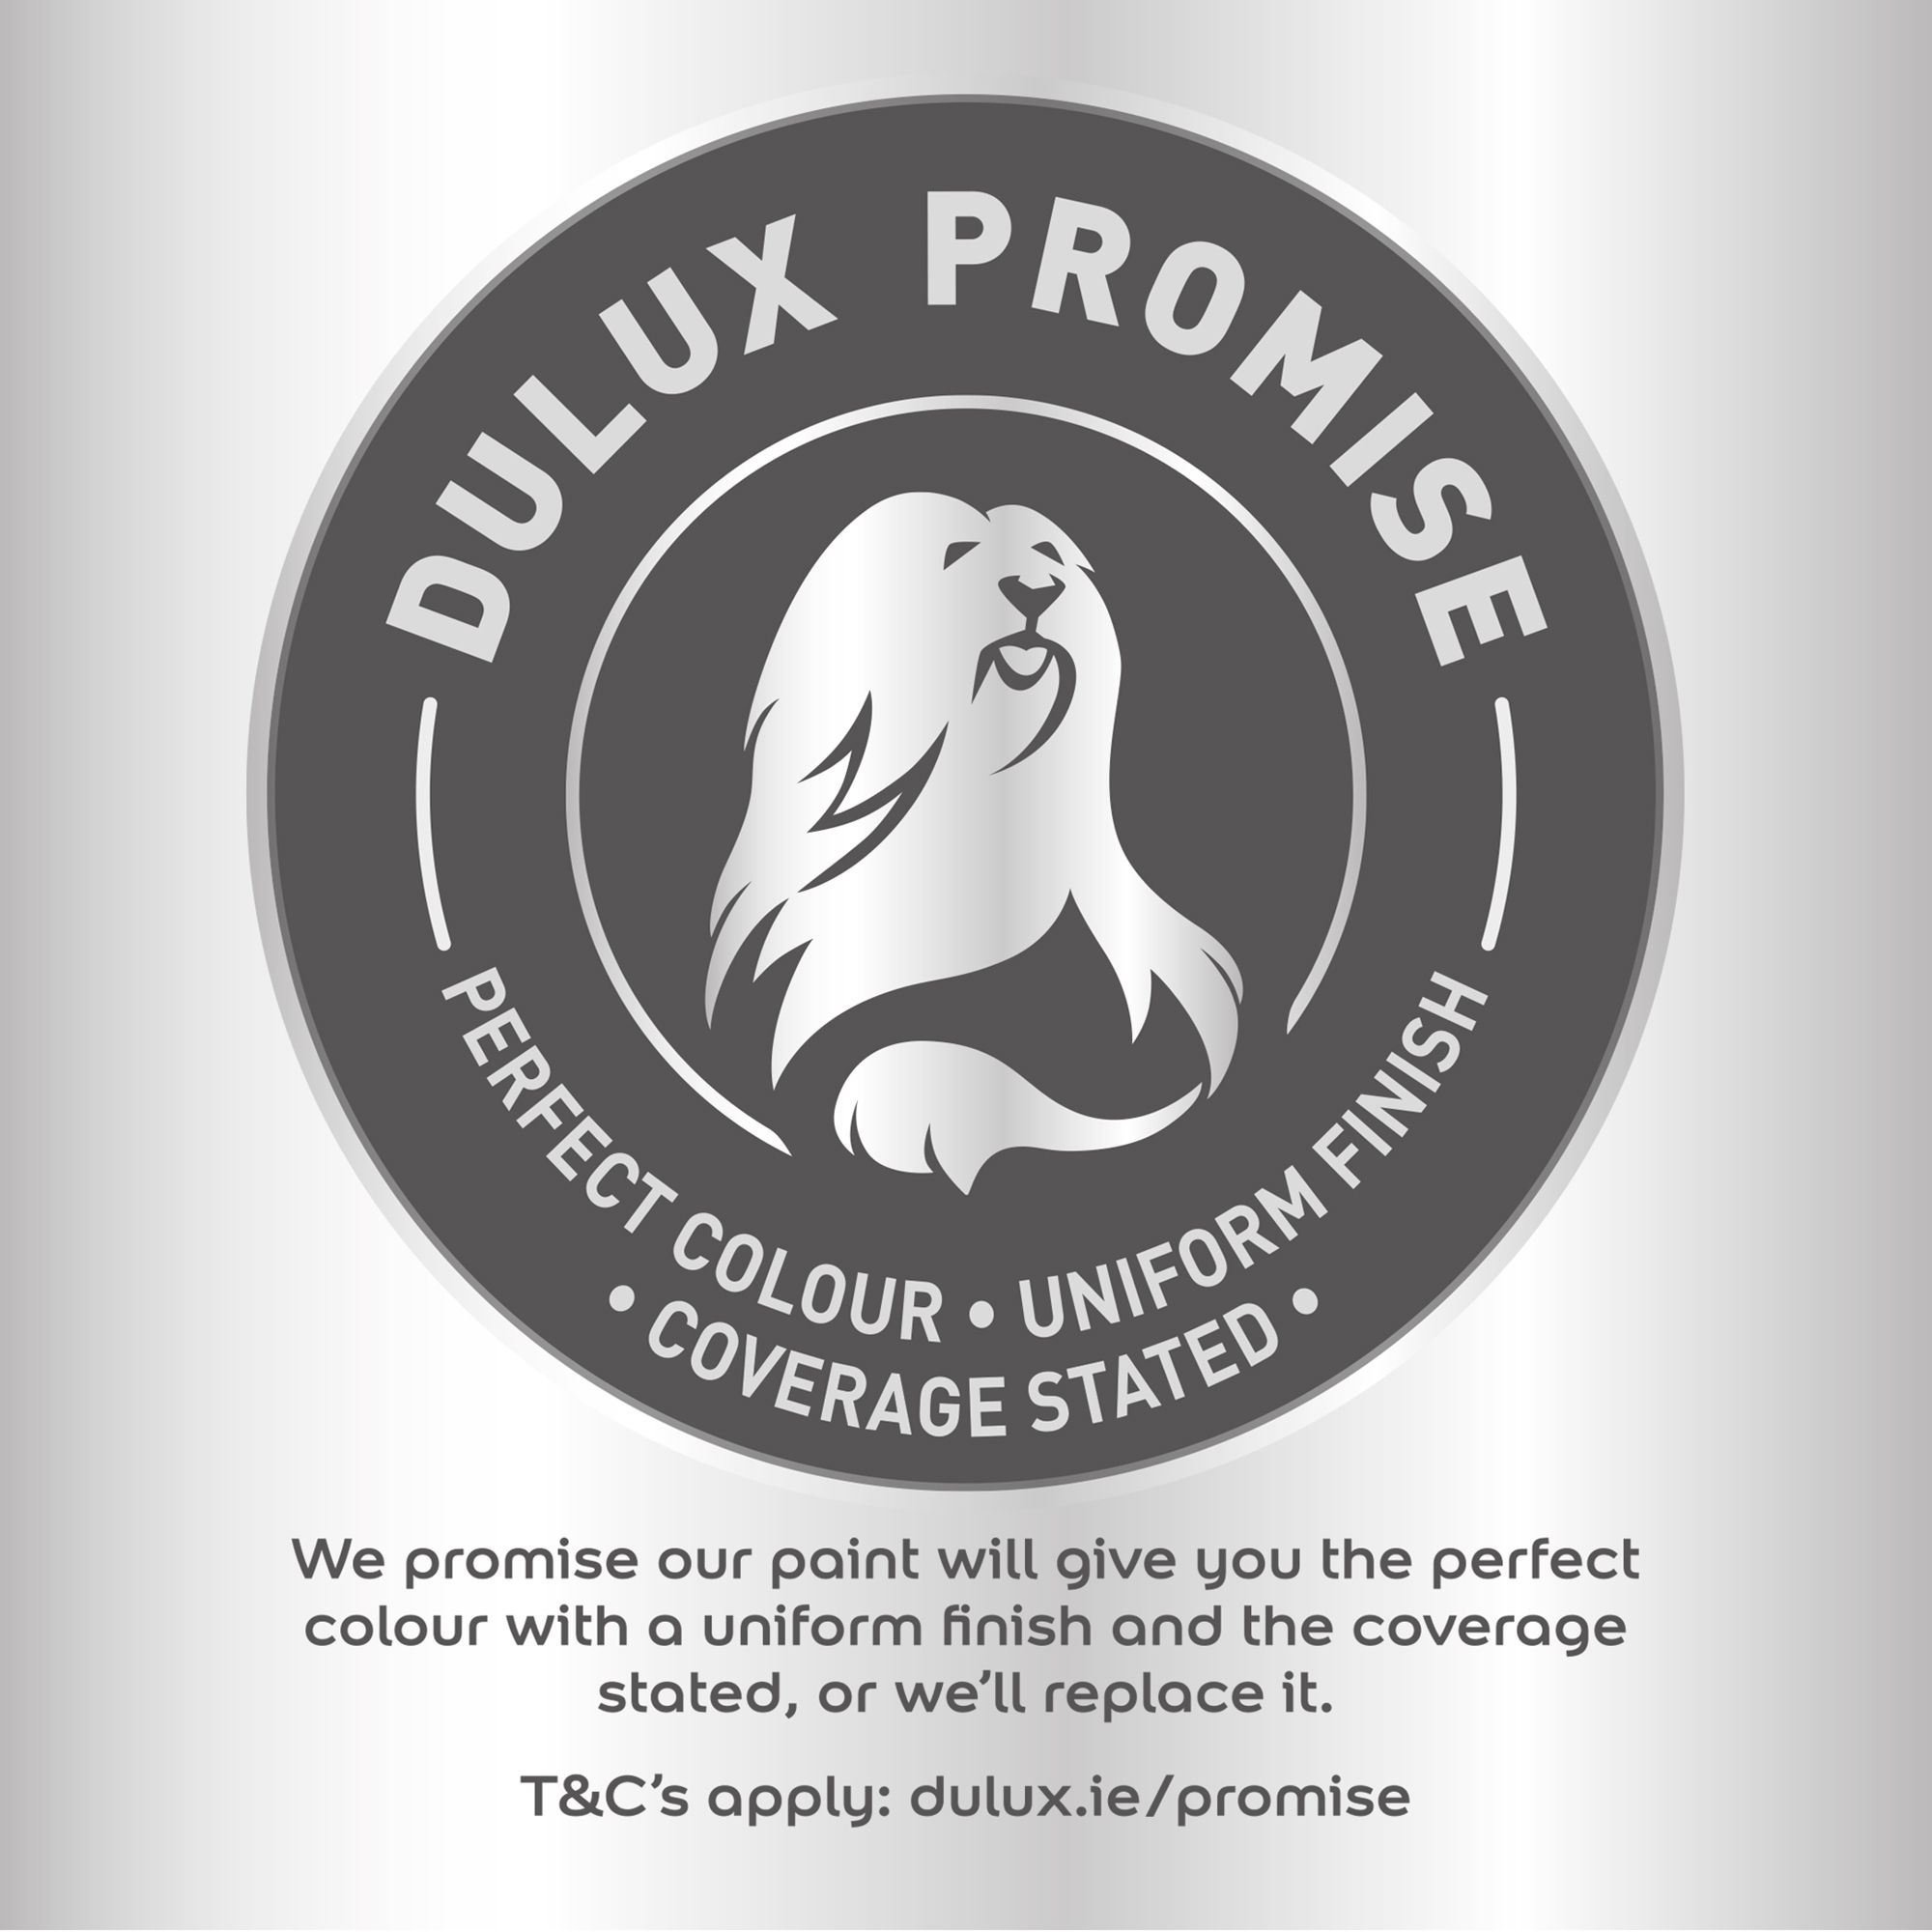 Dulux Easycare Vintage cream Vinyl matt Emulsion paint, 10L